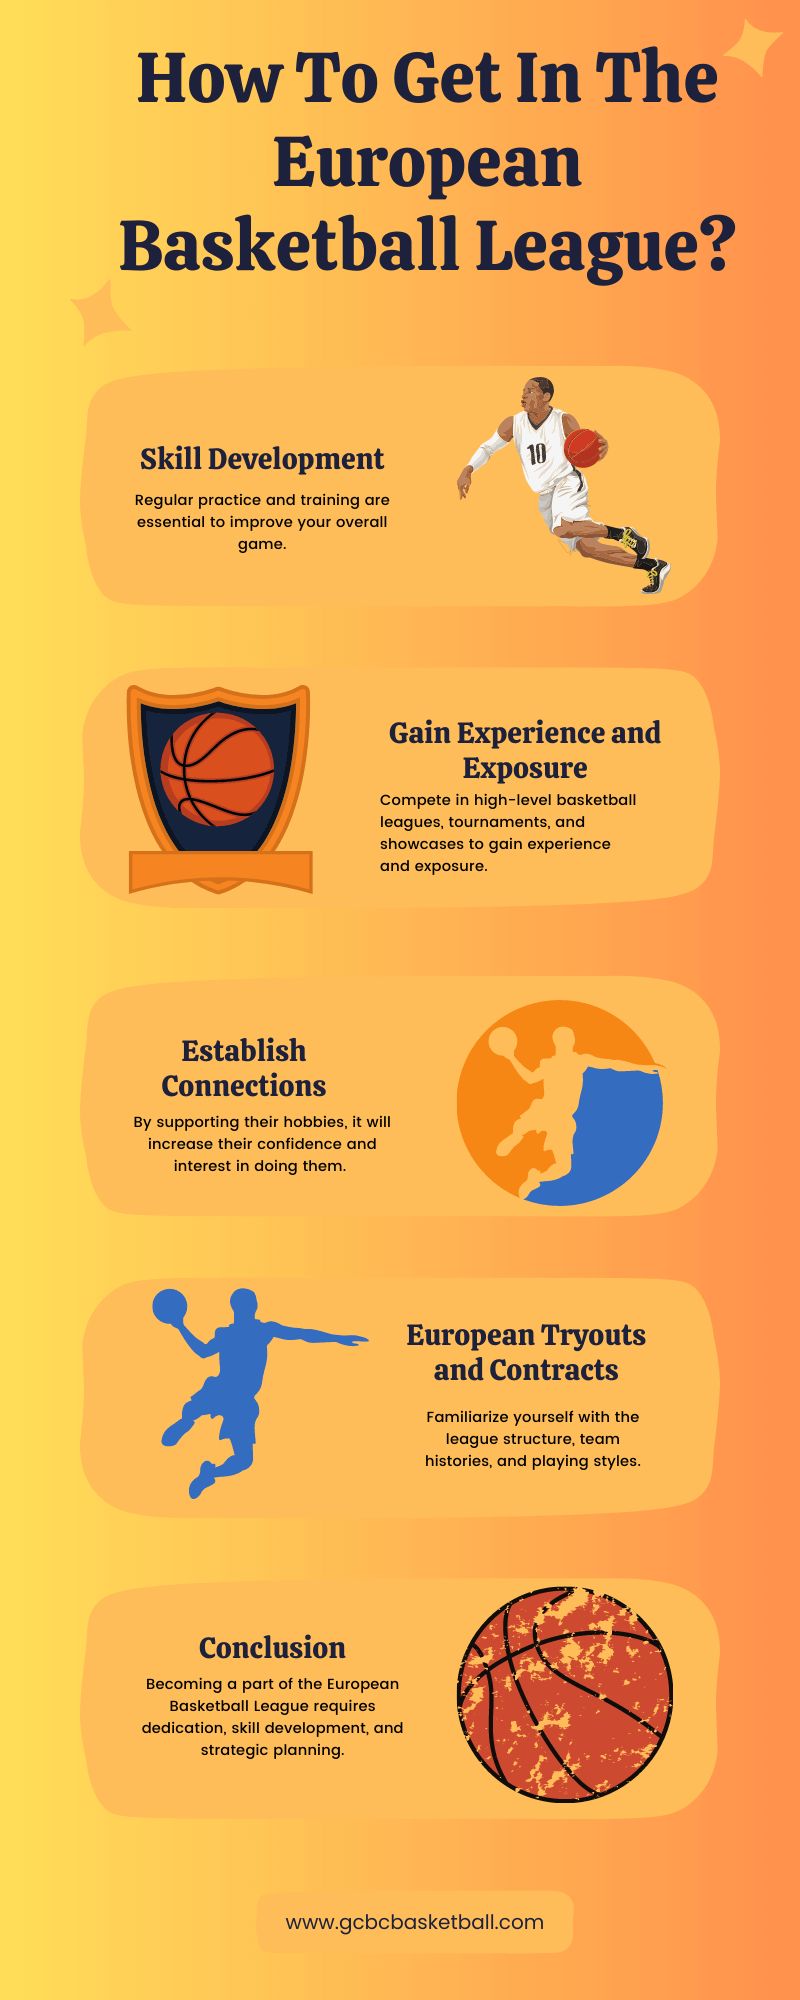 Do European Basketball Players Get Paid?